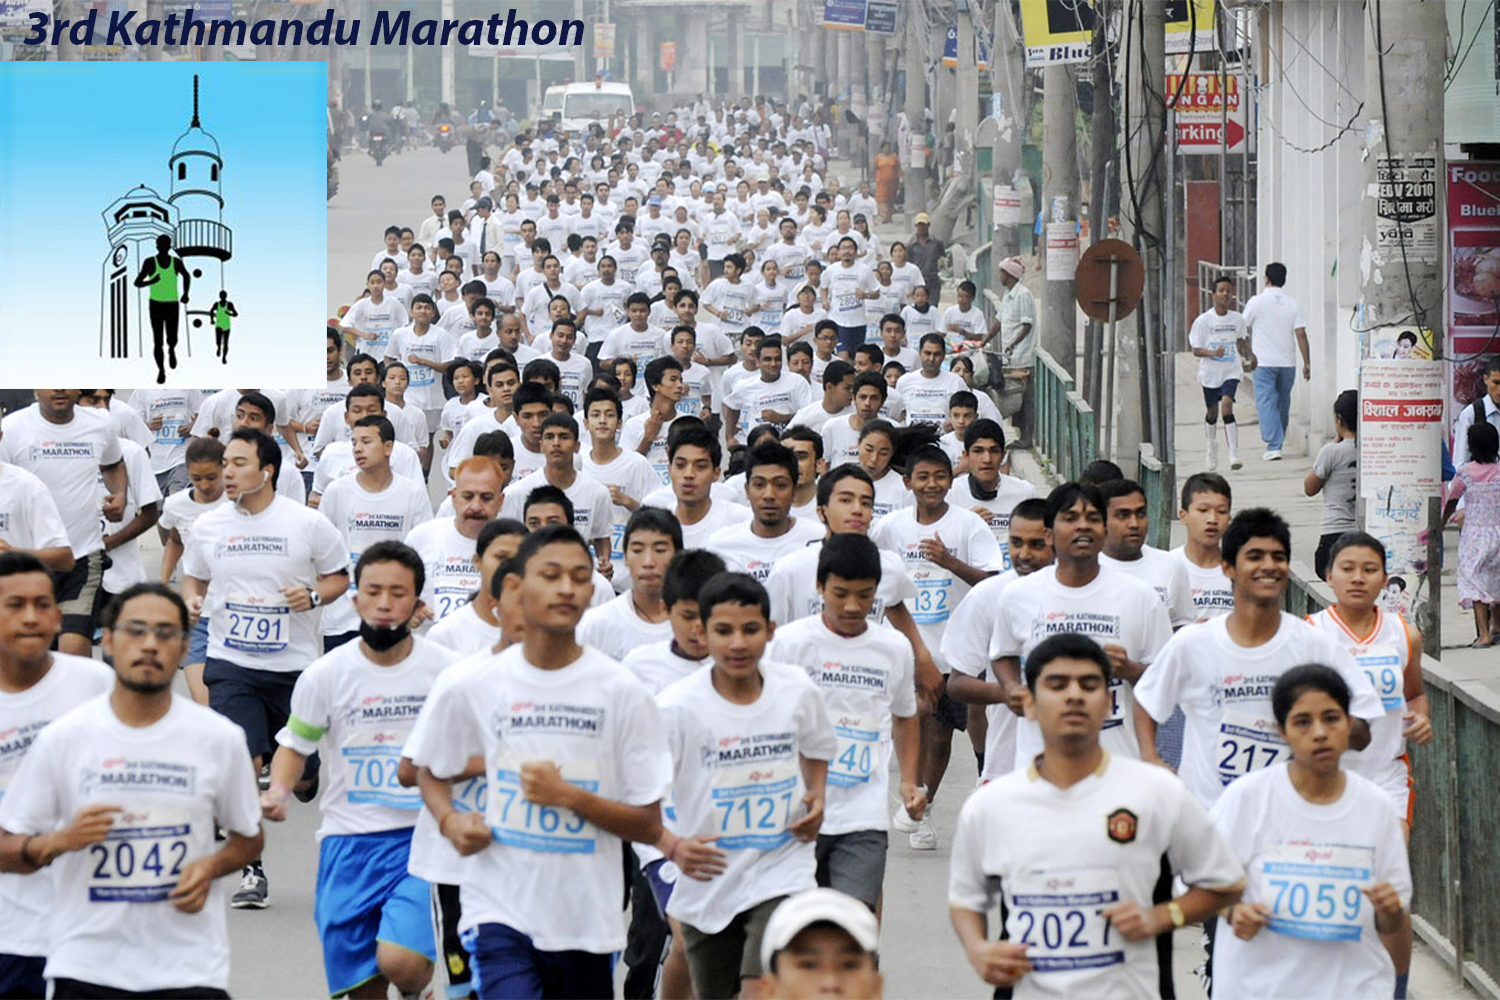 3rd Kathmandu Marathon